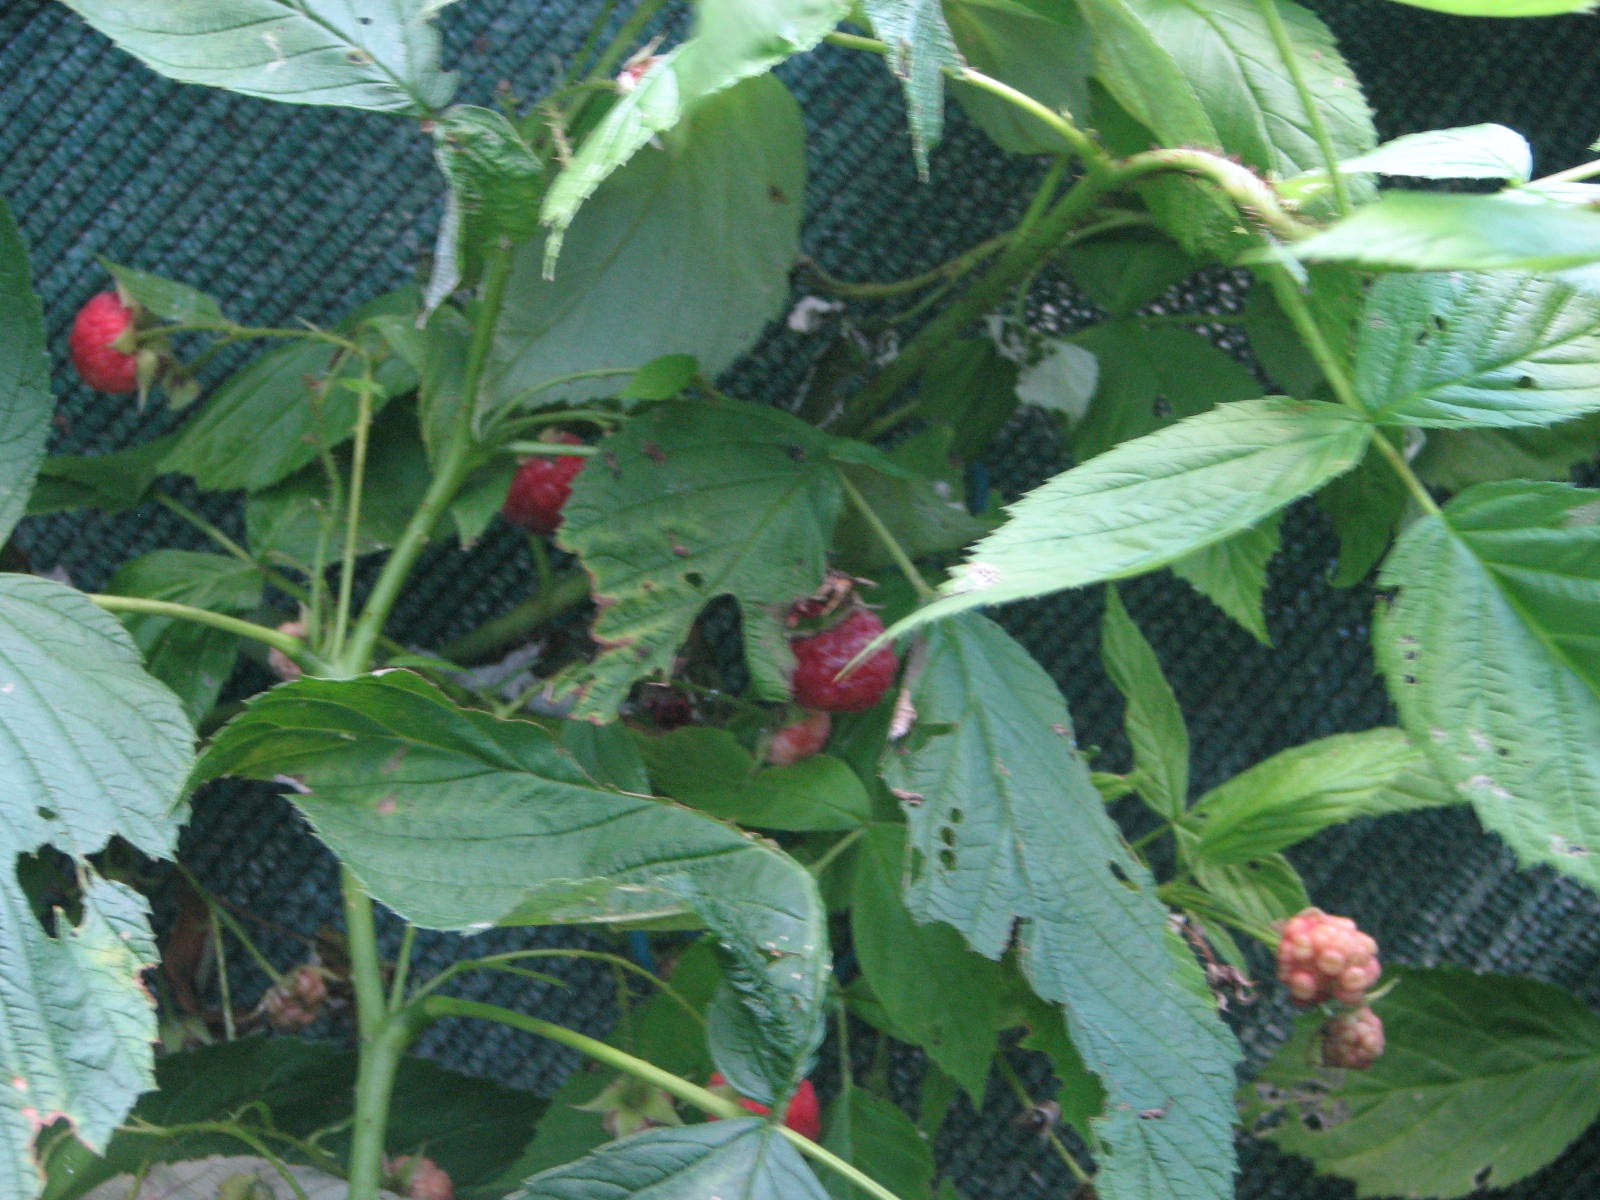 Weather-beaten Raspberries